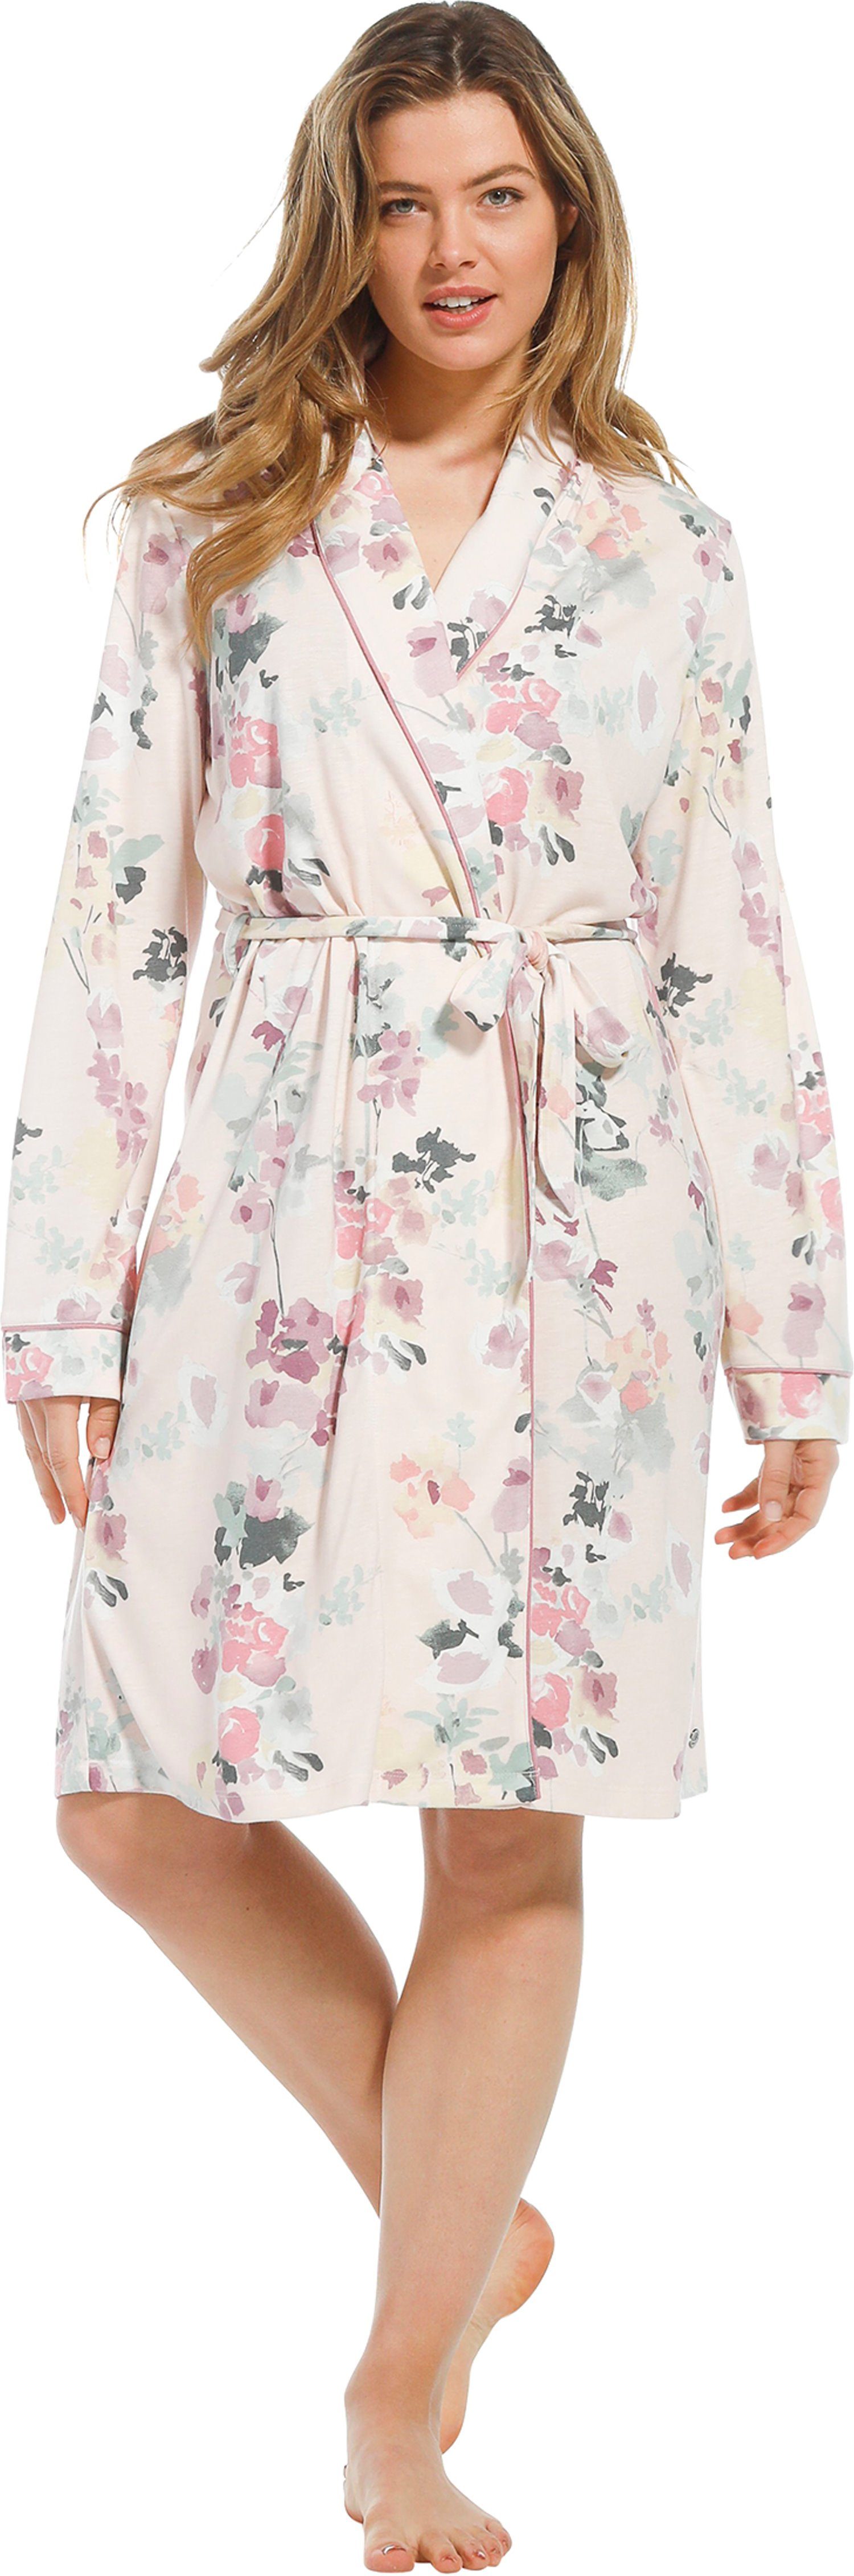 Pastunette Kimono Damen Kimono mit Blumen, Midi, Viskosemischung, Schalkragen, Gürtel, Blmen allover | Damen Bademäntel